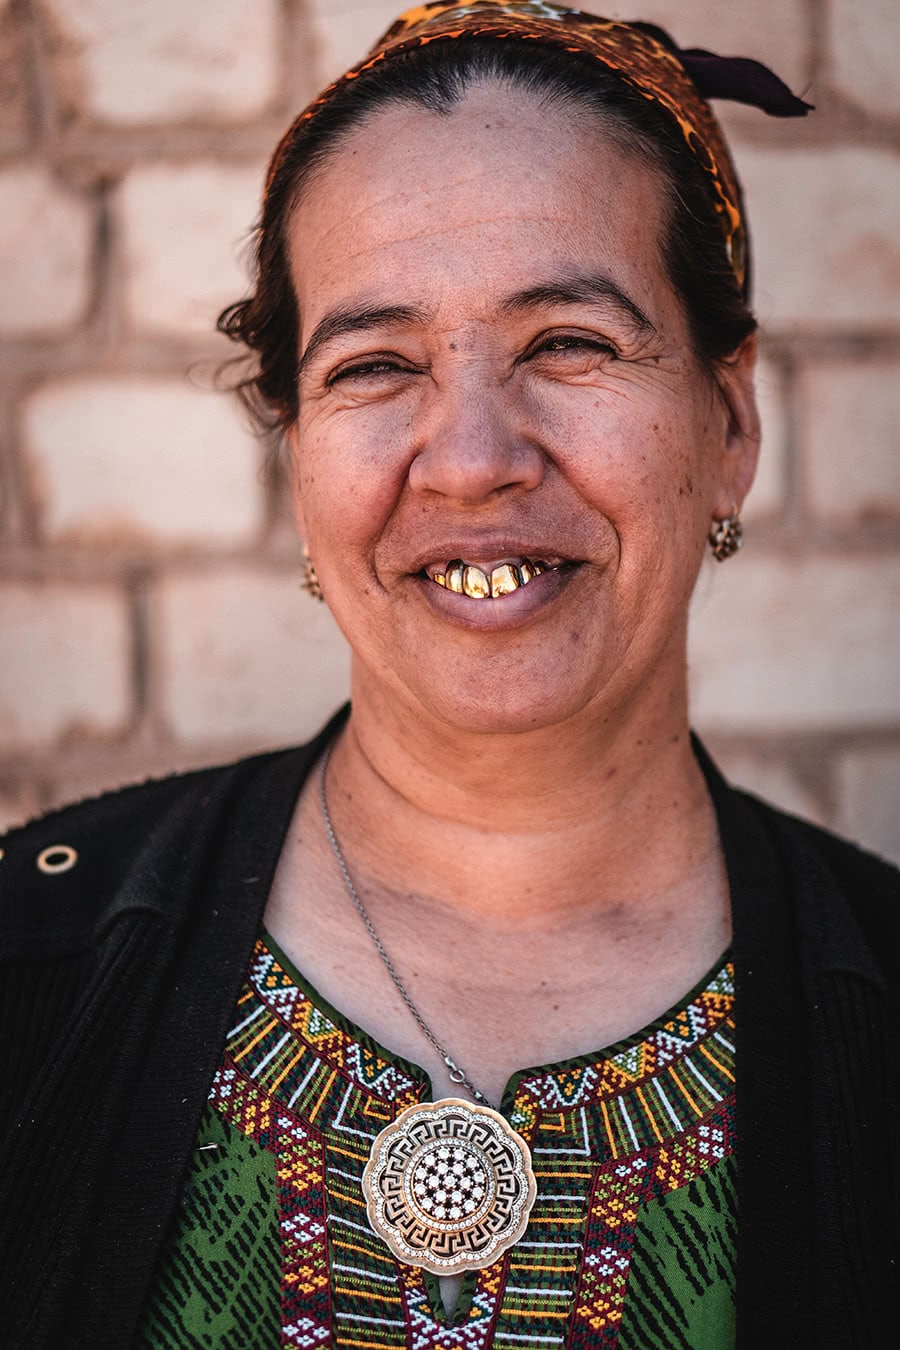 A villager in Erbent, Turkmenistan with golden teeth.